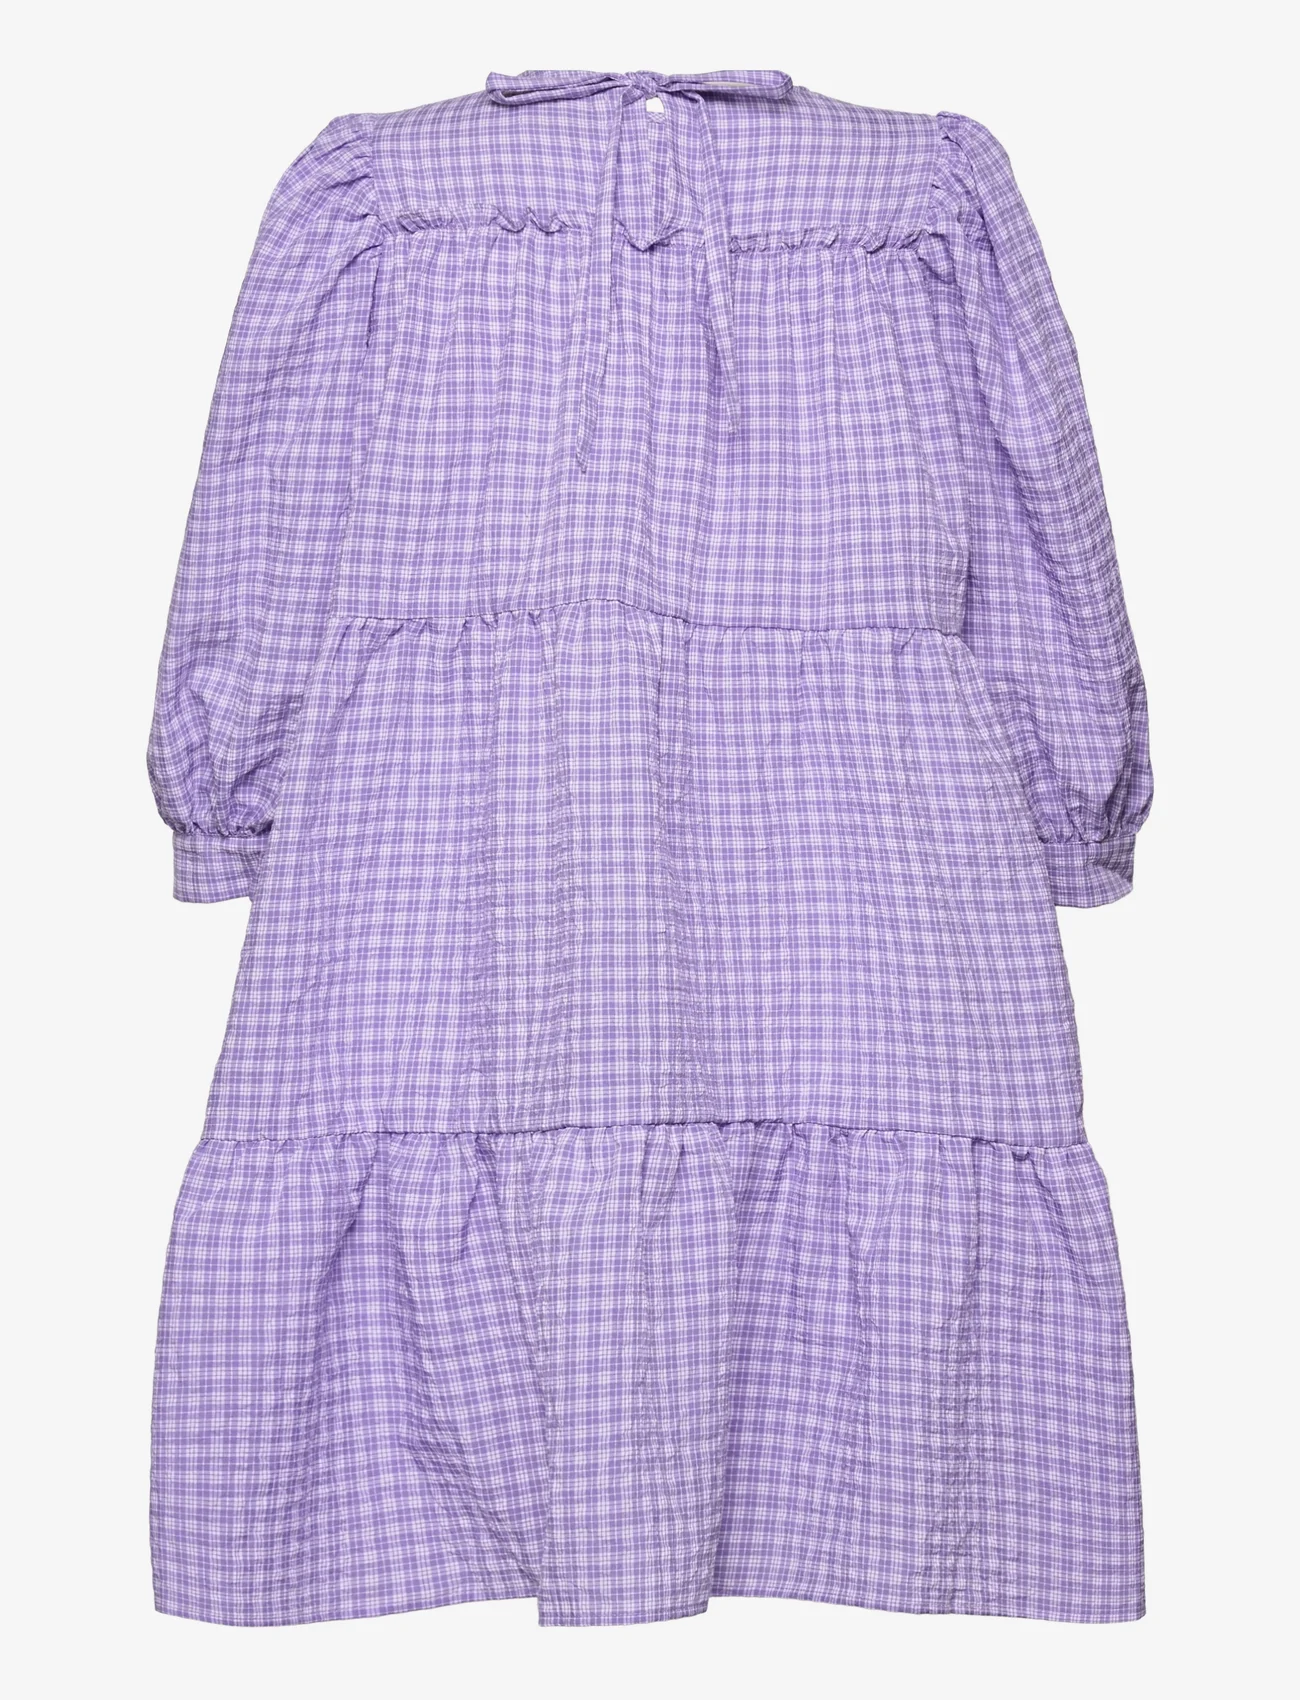 Minus - Rowen kjole - korte kjoler - purple checked - 1